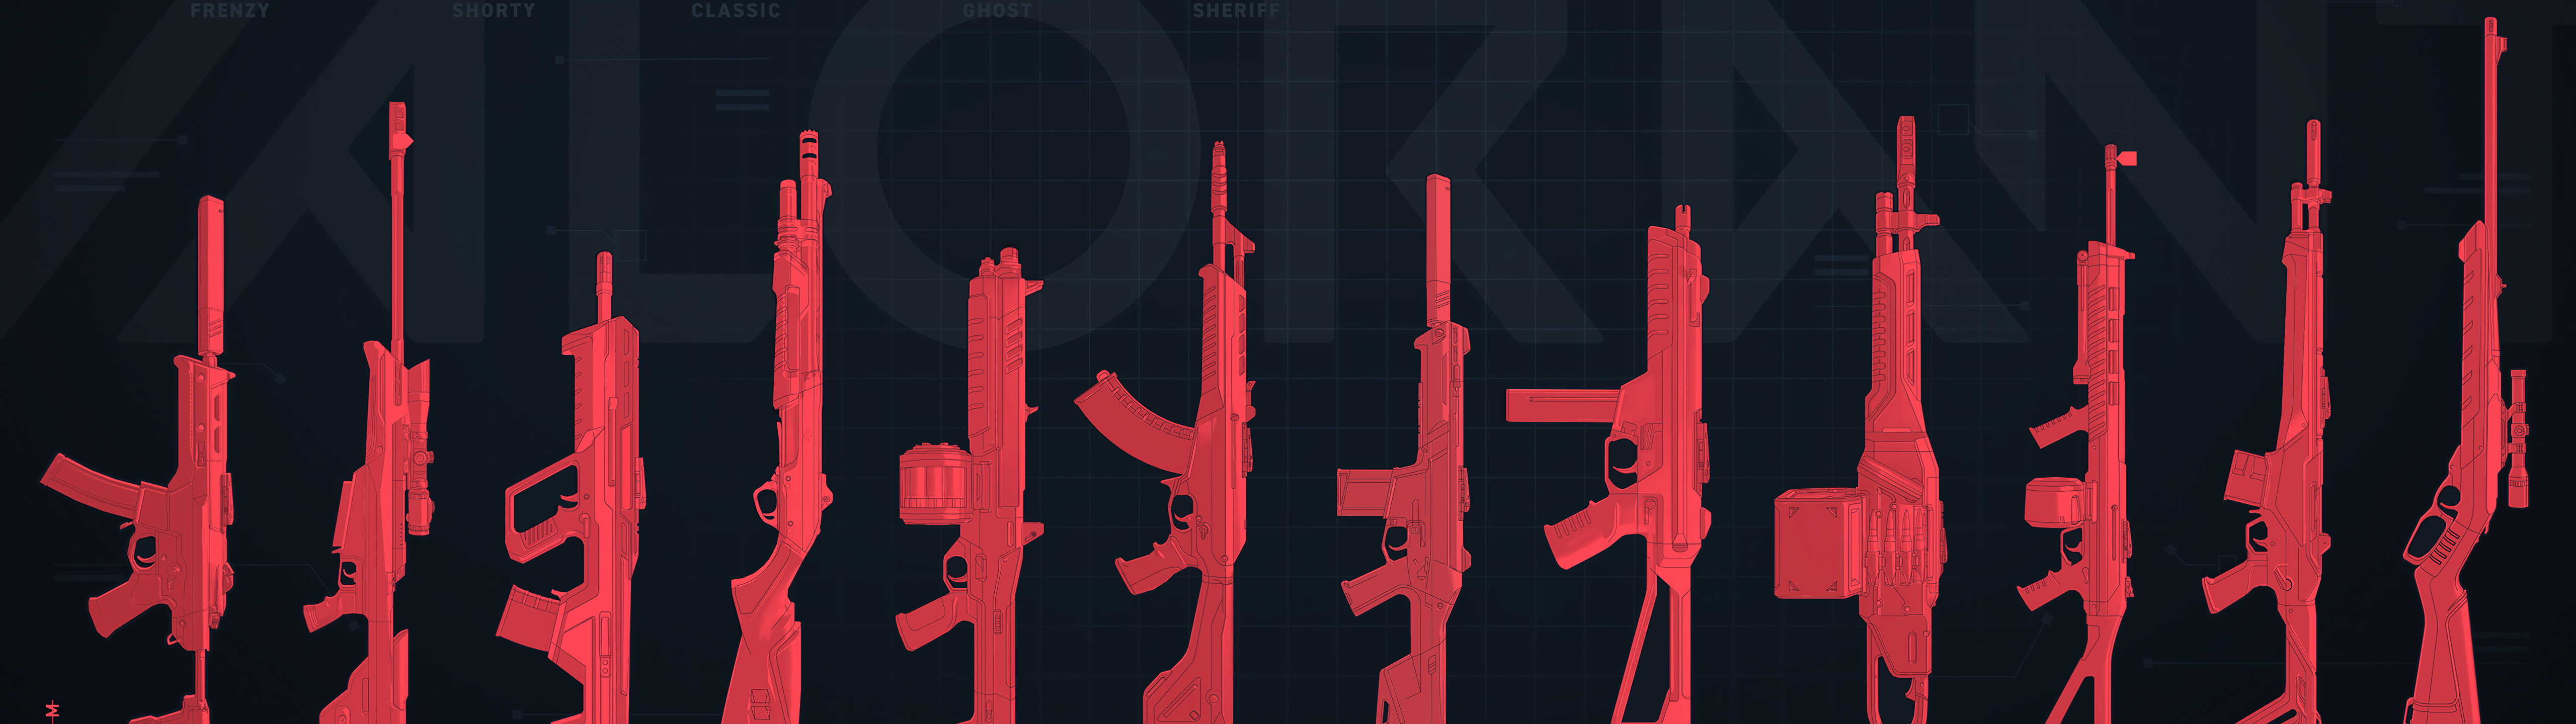 Valorant Guns Weapons Wallpaper 4K iPhone Desktop 273 5120x1440